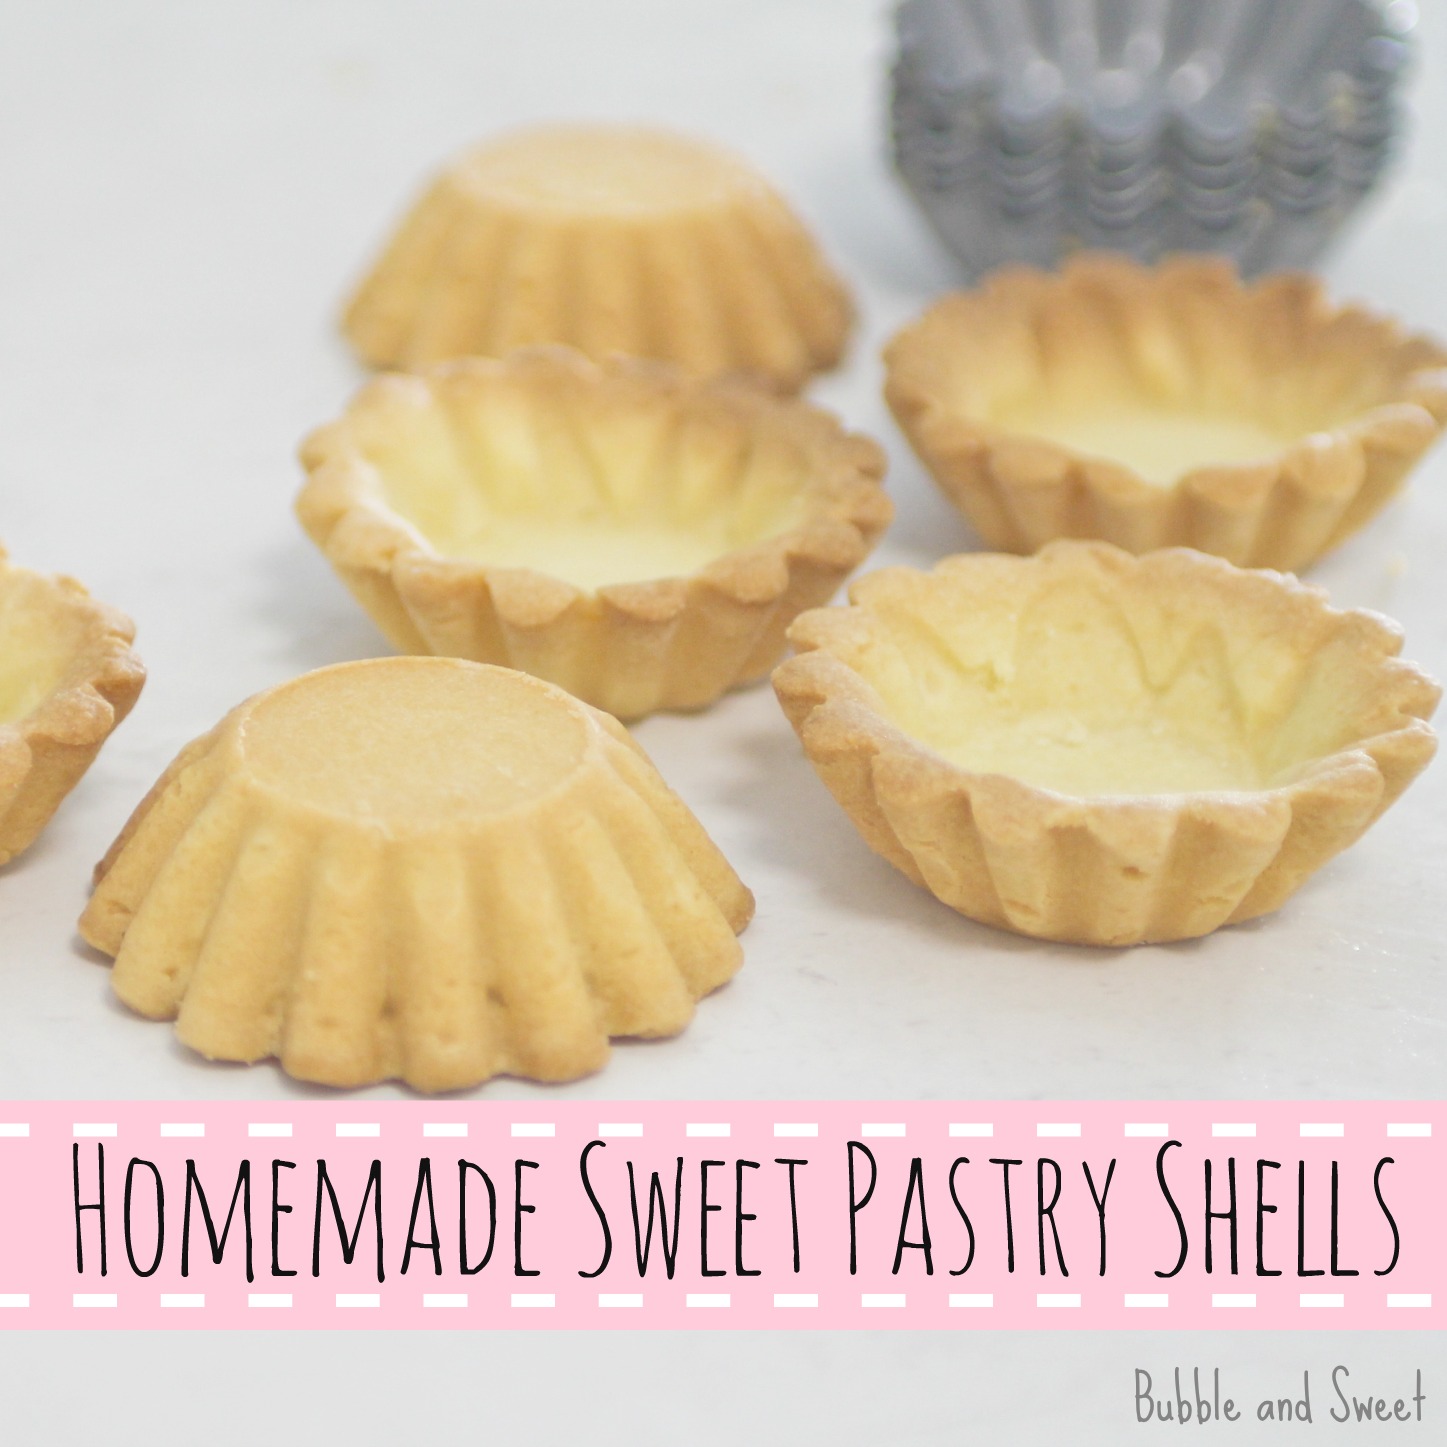 http://4.bp.blogspot.com/-MvhMXzHrMi8/U0I2LxQD9cI/AAAAAAAAMCo/gLaZ4lSbb78/s1600/homemade+sweet+pastry+shell+tart+pie+recipe+pink+tin+pretty.jpg